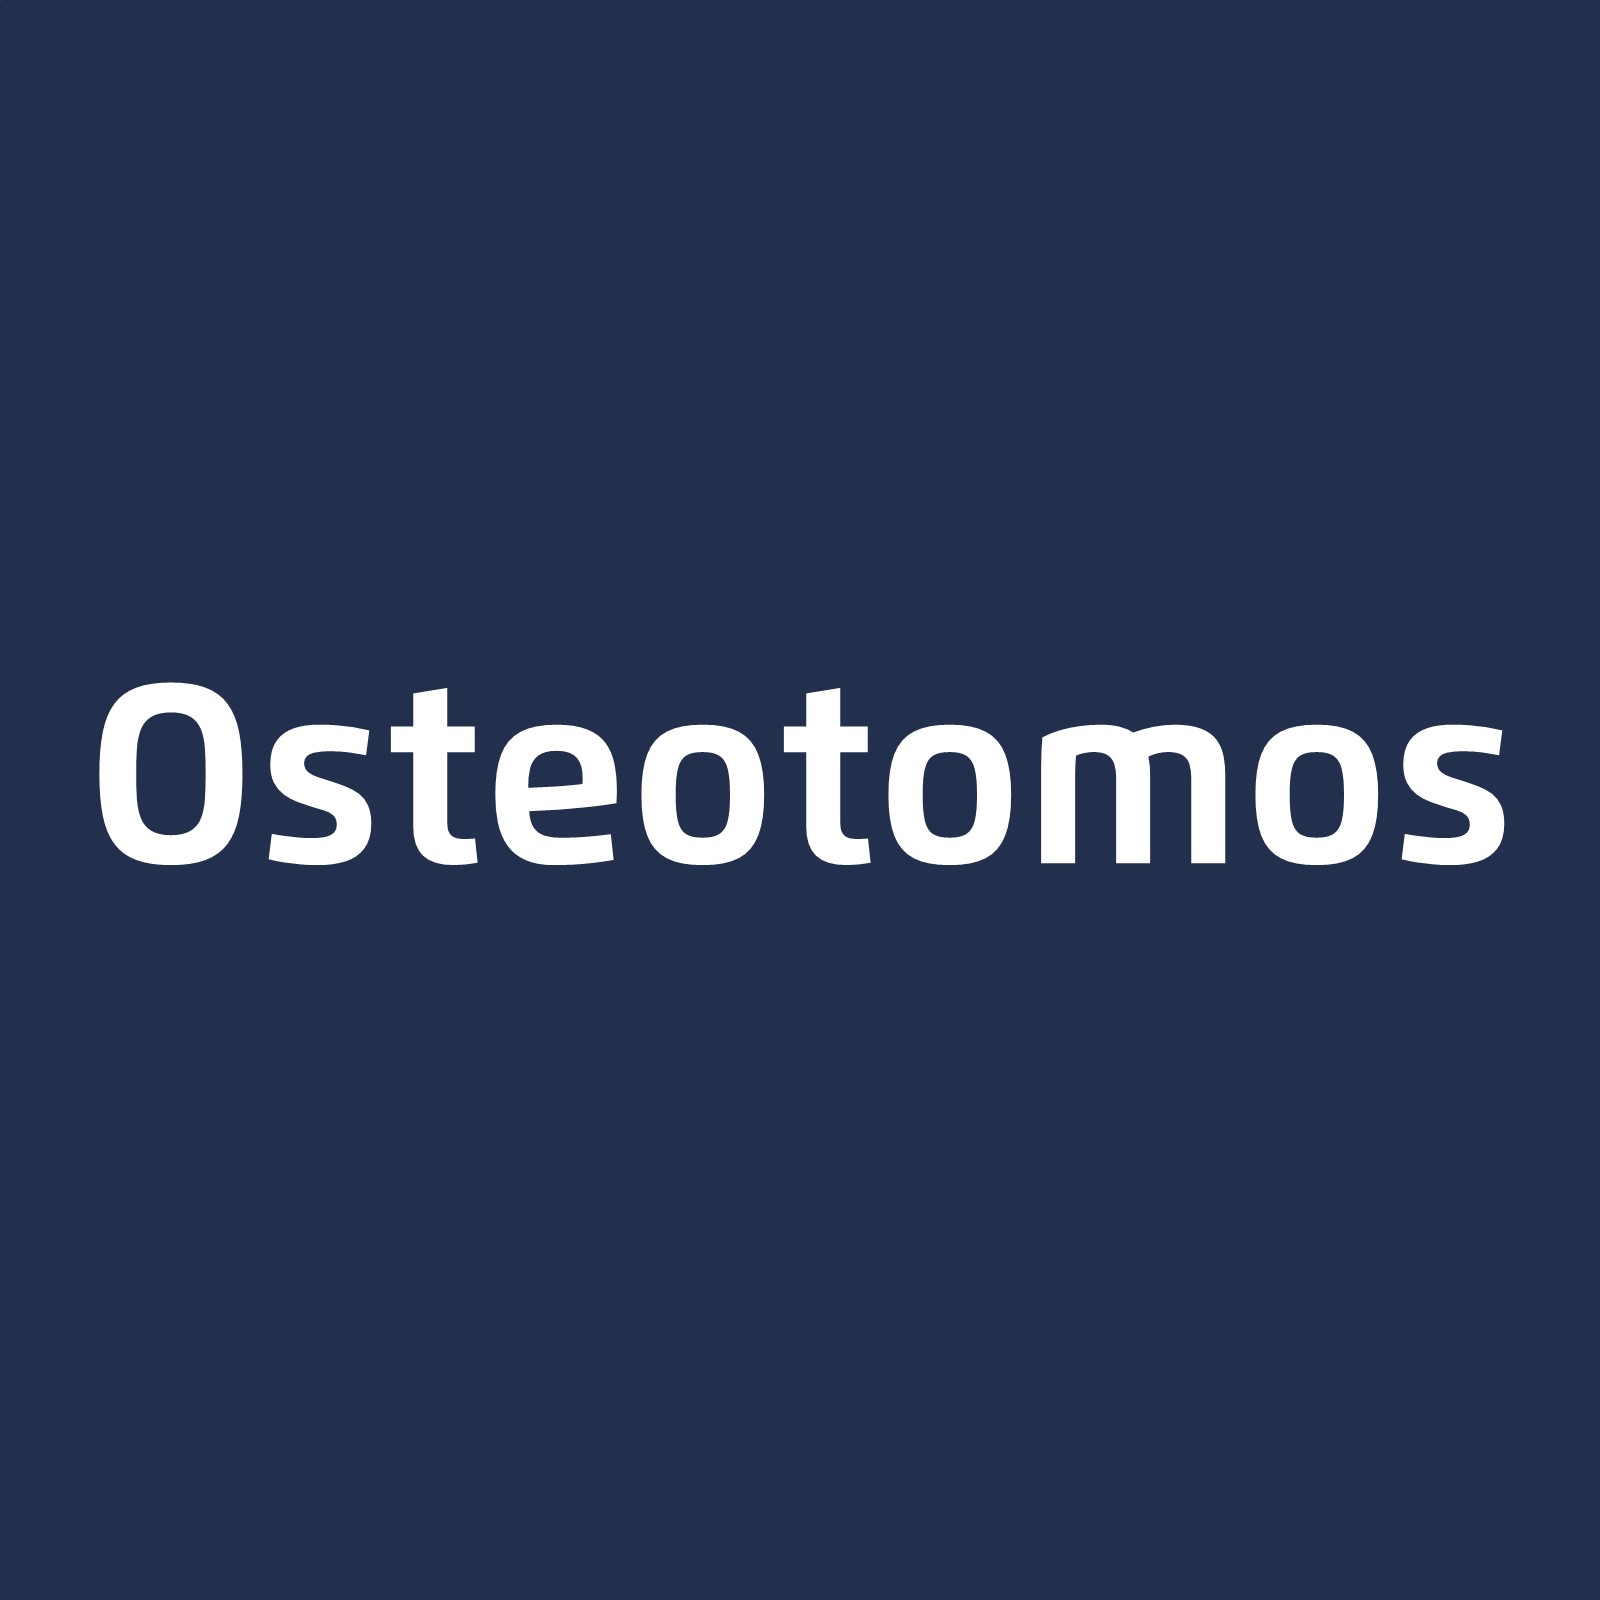 Osteotomos